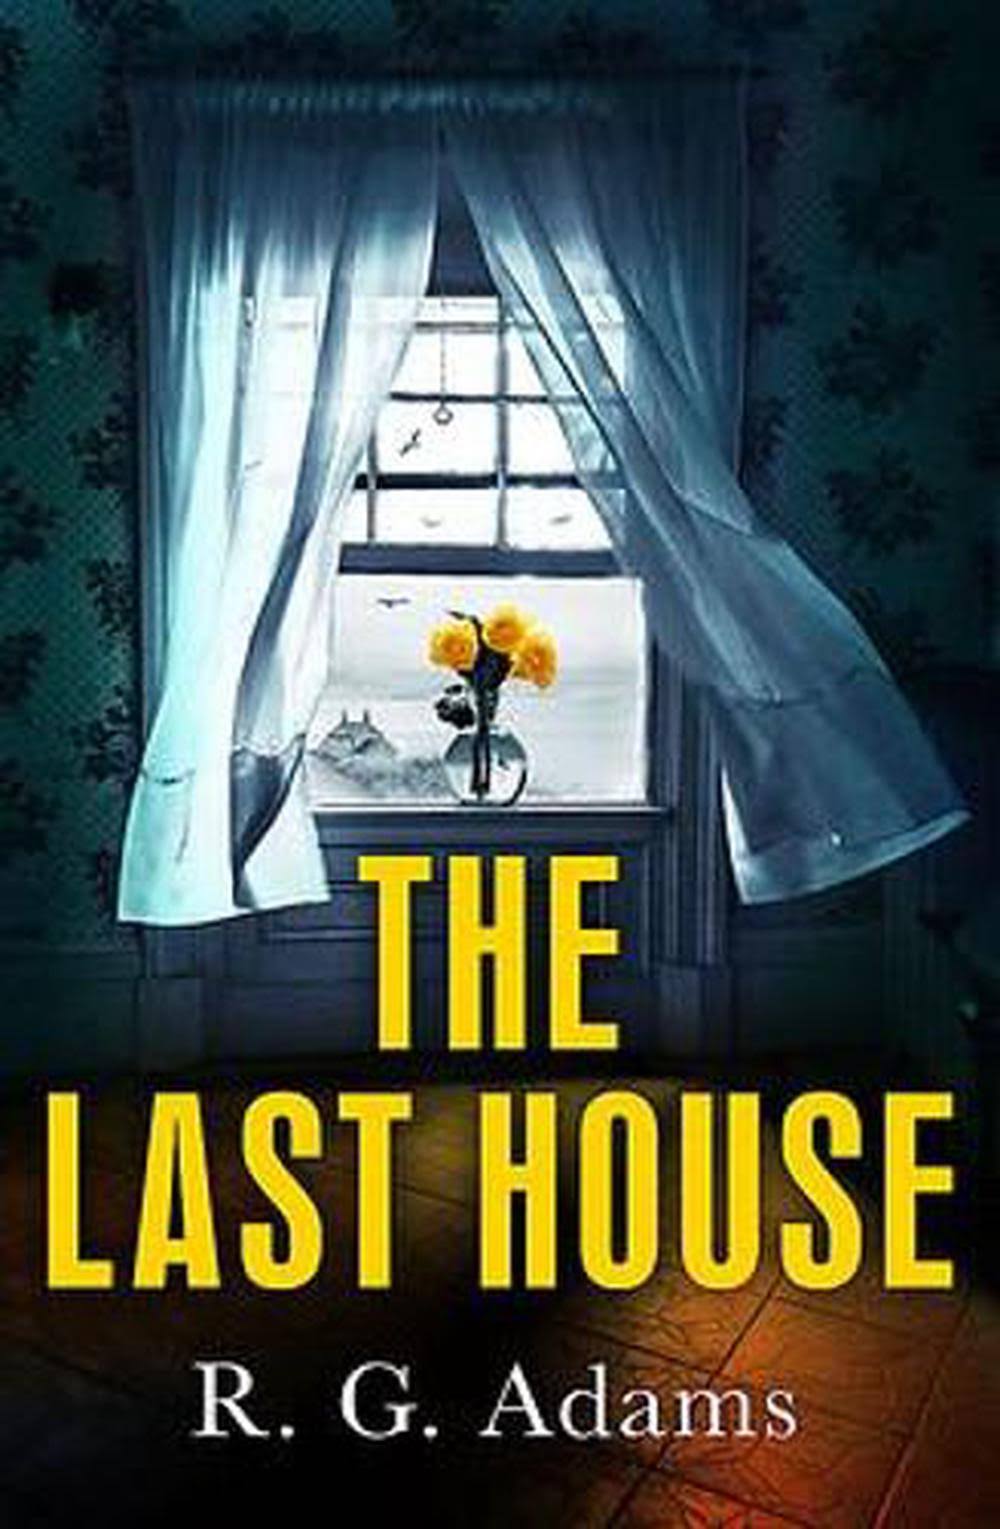 The Last House by R. G. Adams